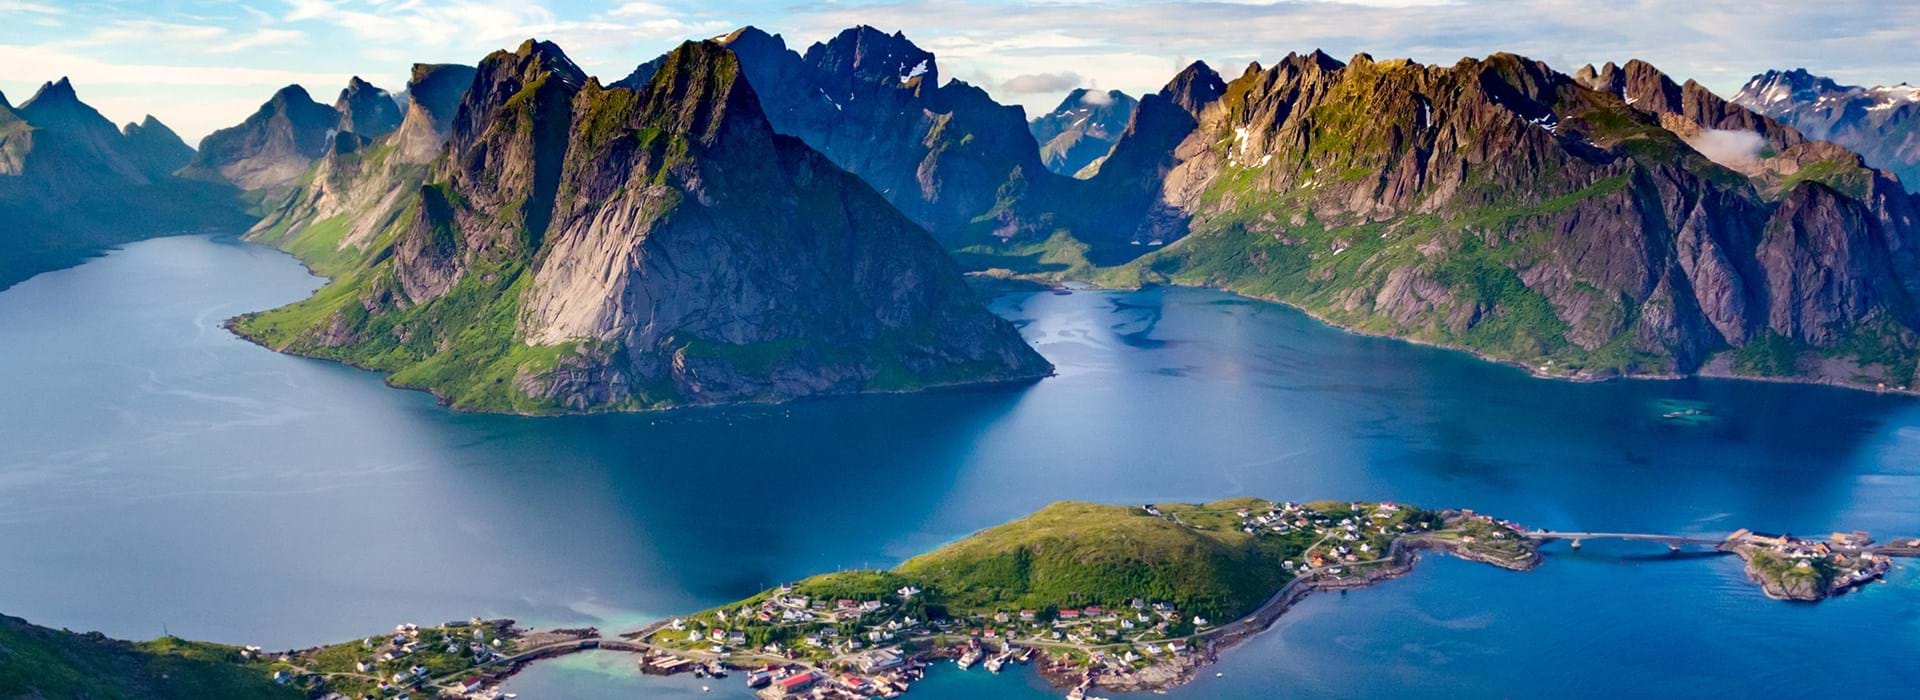 header_istock-noorwegen-lofoten-eiland-archipel-reisgids-2018